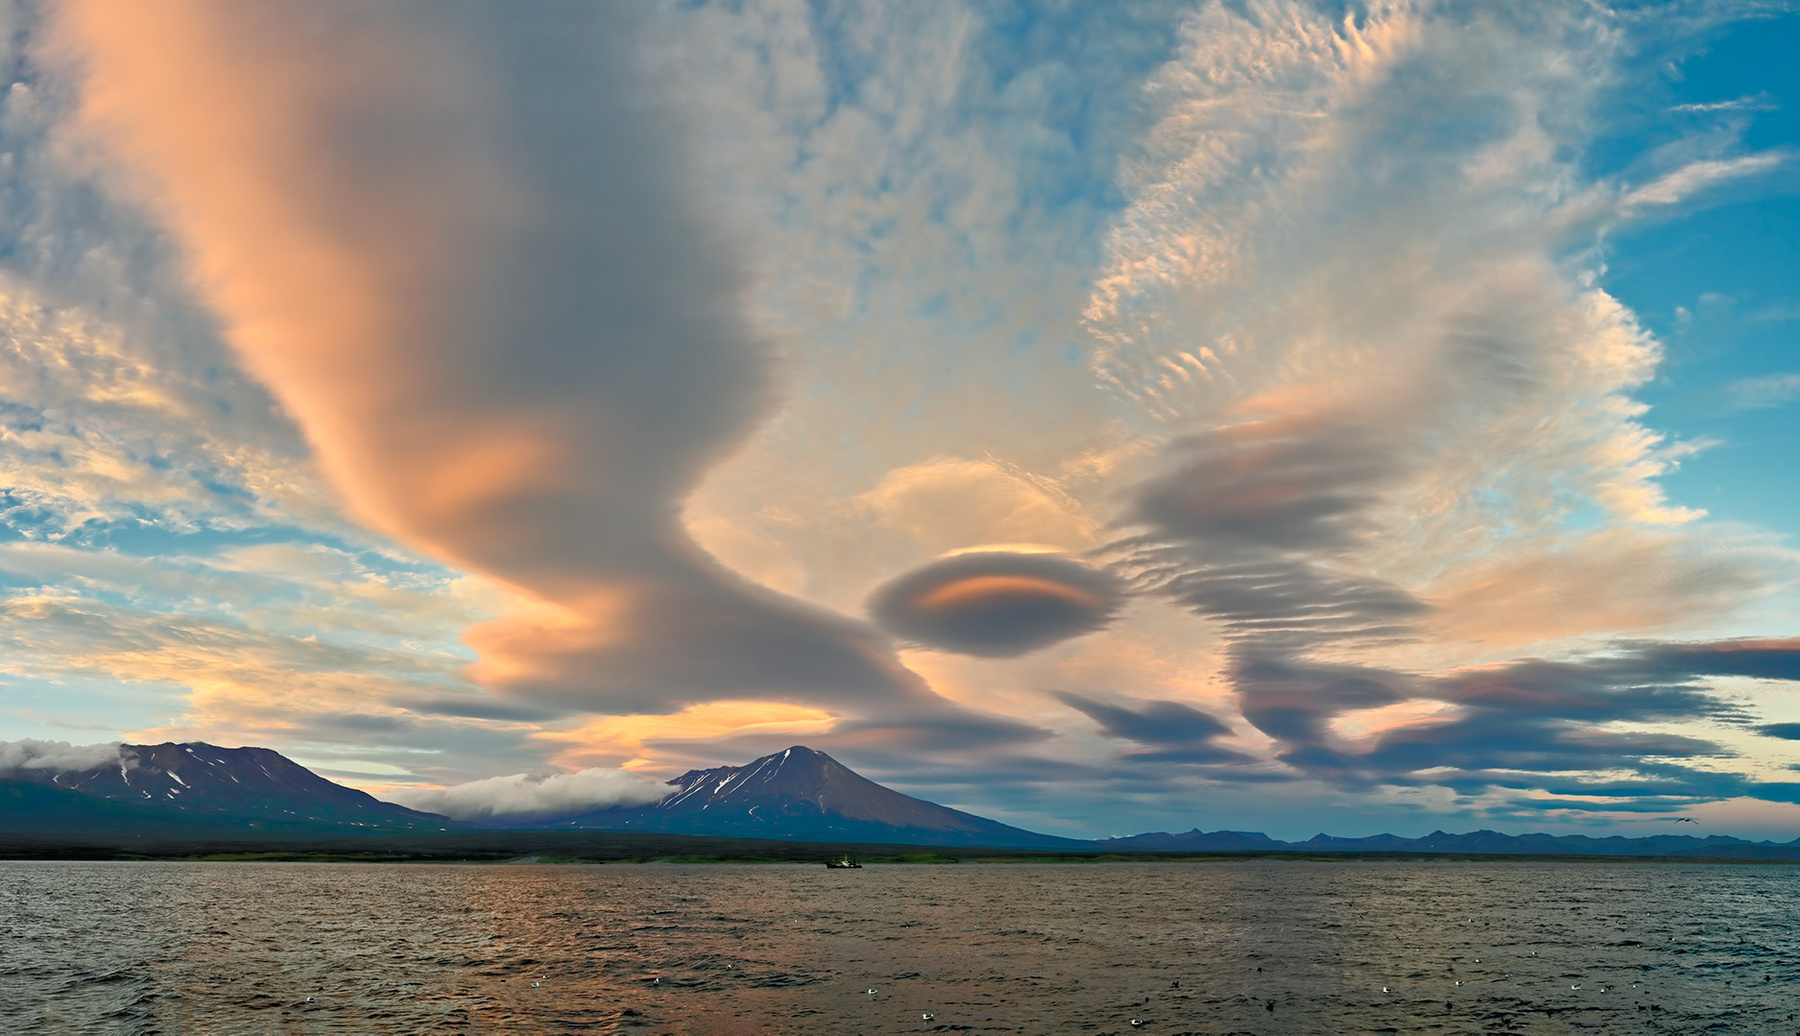 НЛО вечер вулкан горы Камчатка нло облака панорама сентябрь судно